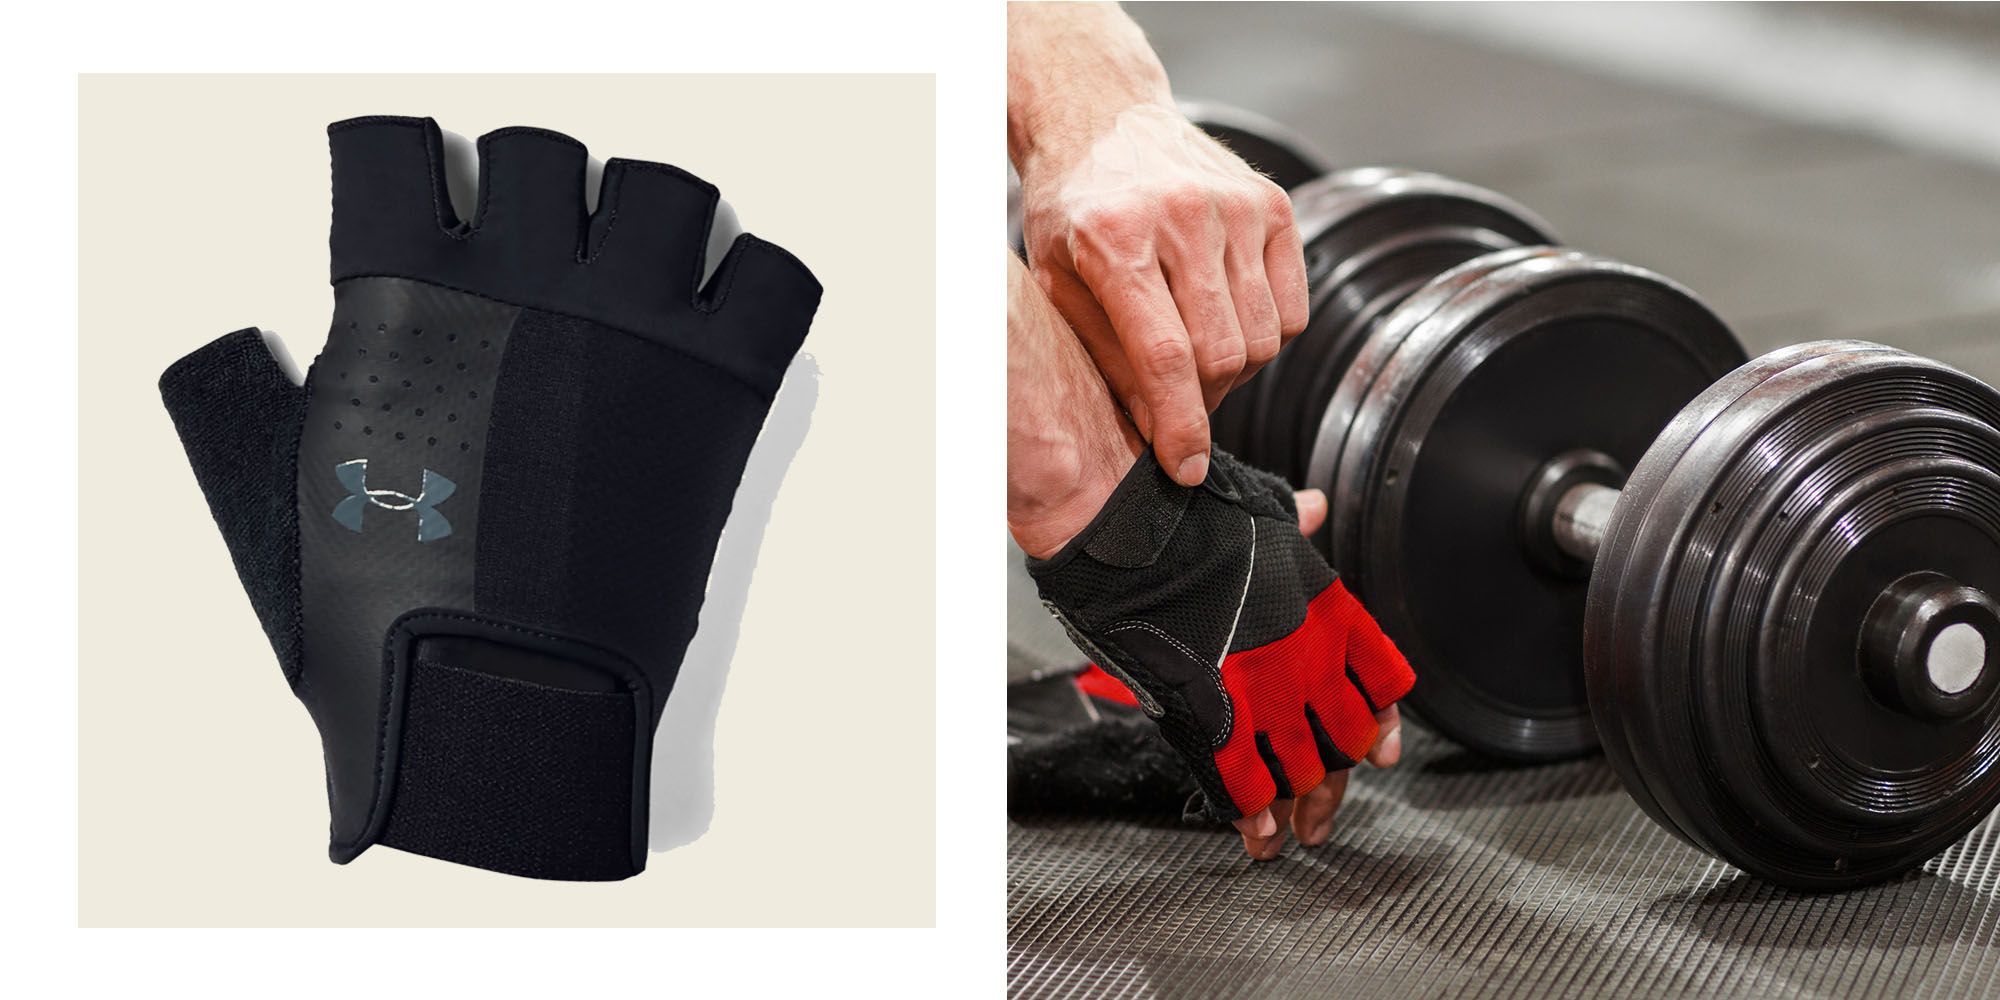 12 Best Gym Gloves for Better Grip and Avoiding Injury